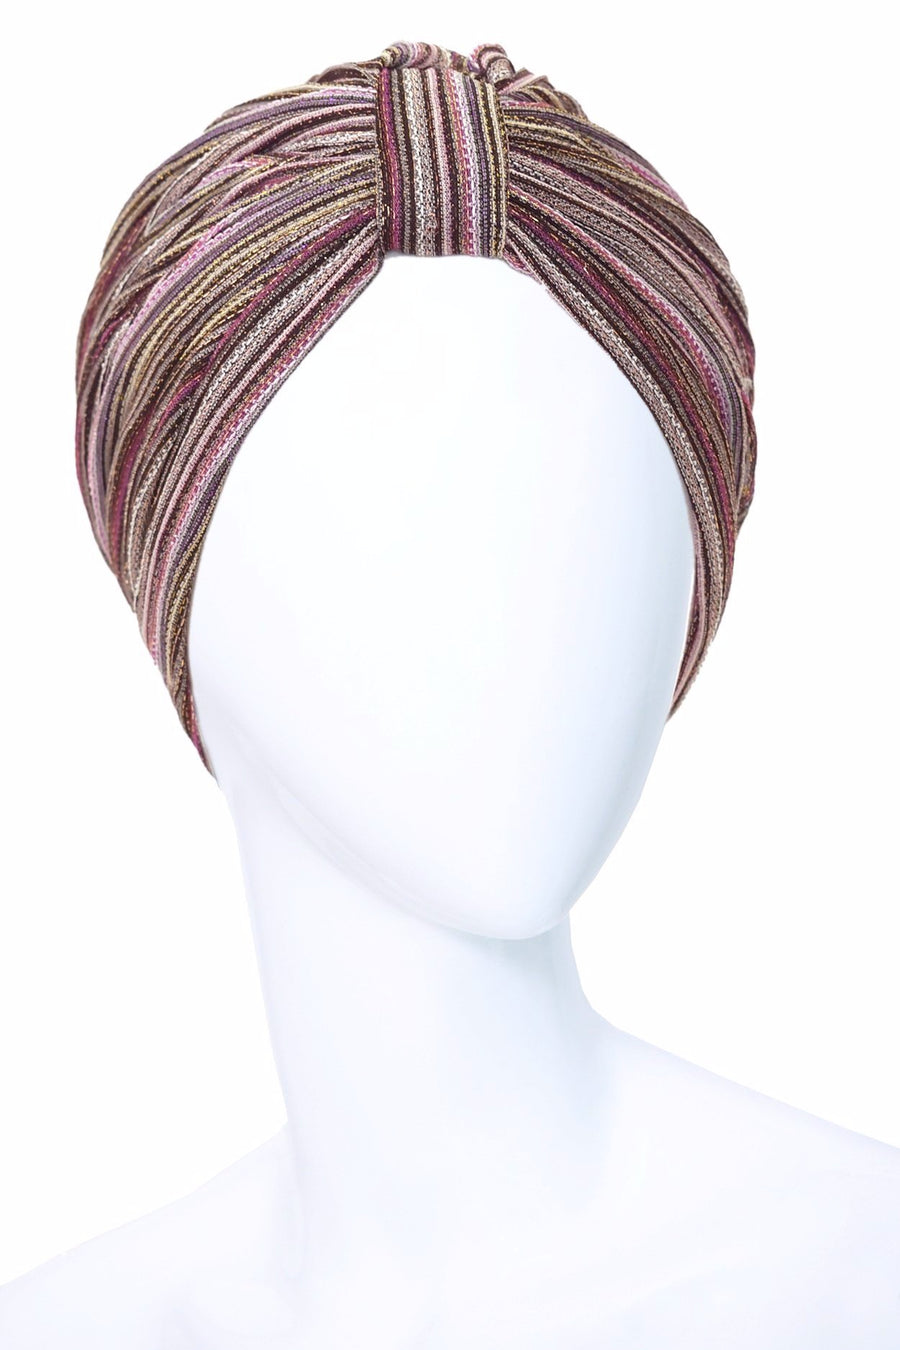 Striped turban